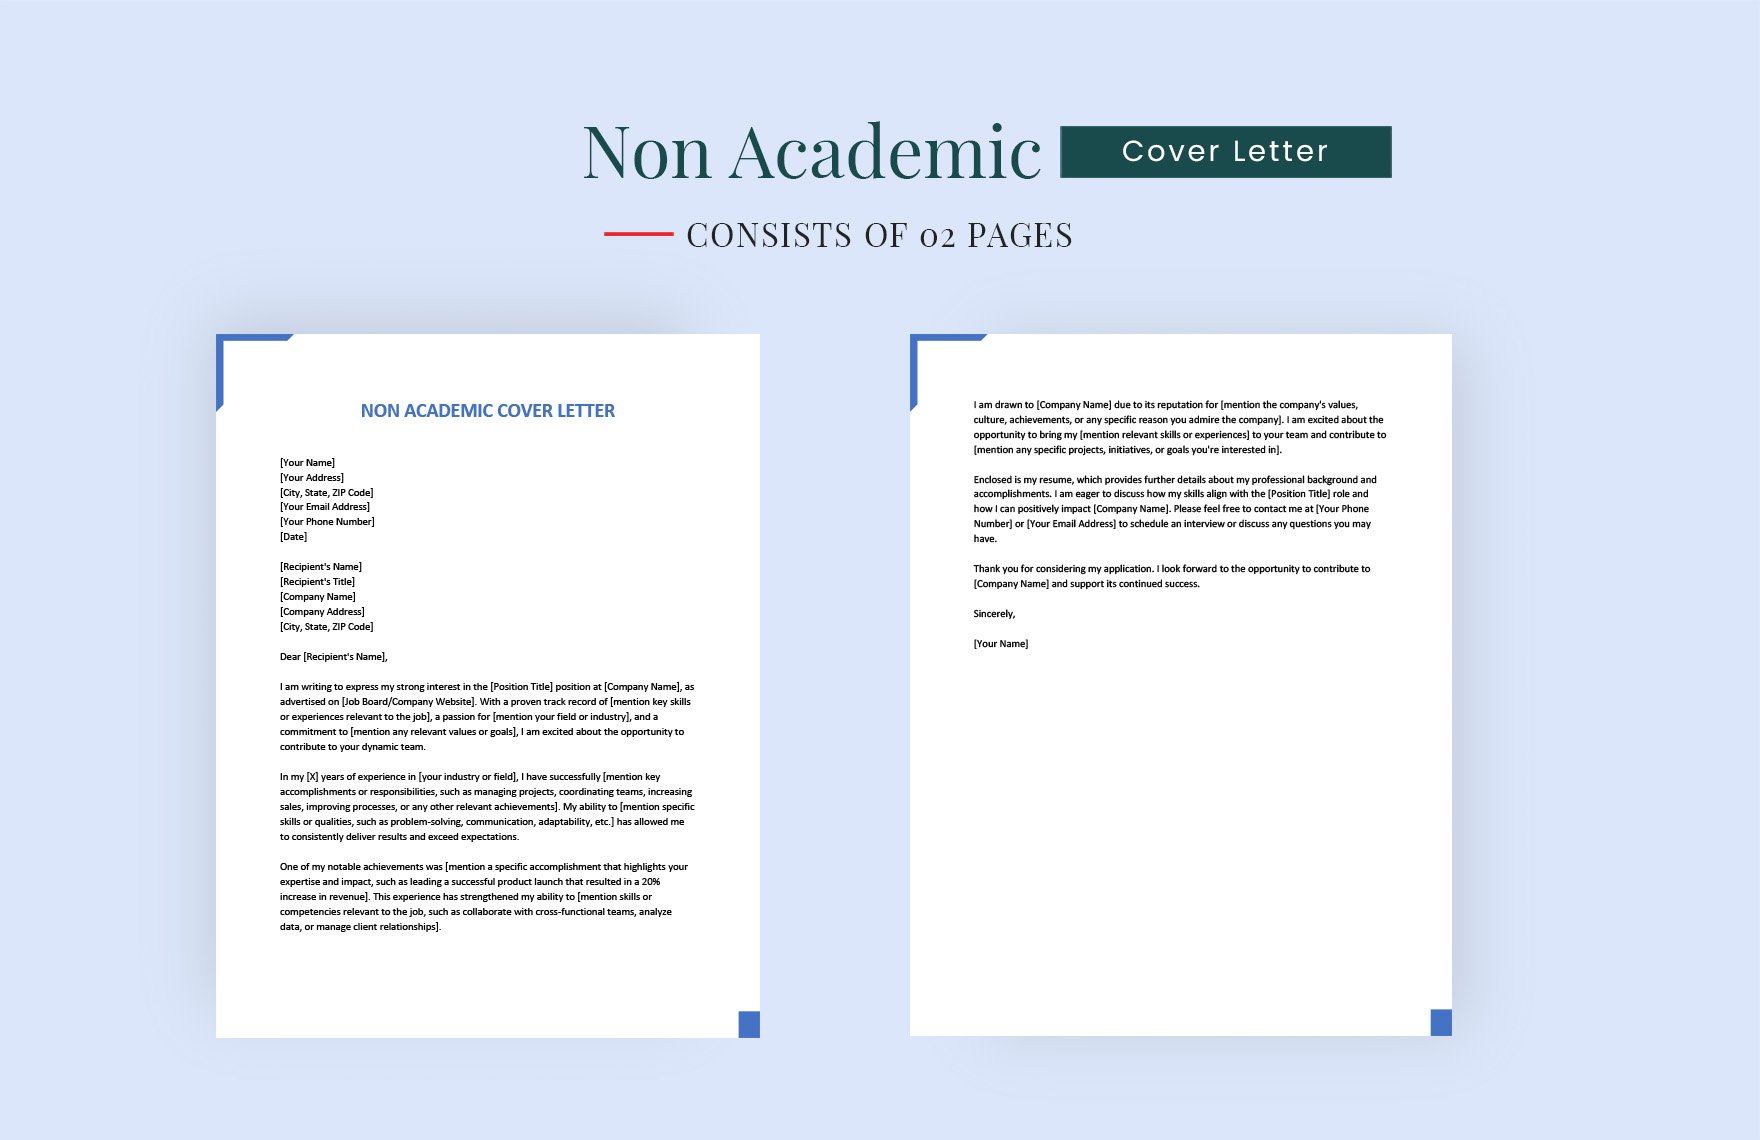 Non Academic Cover Letter